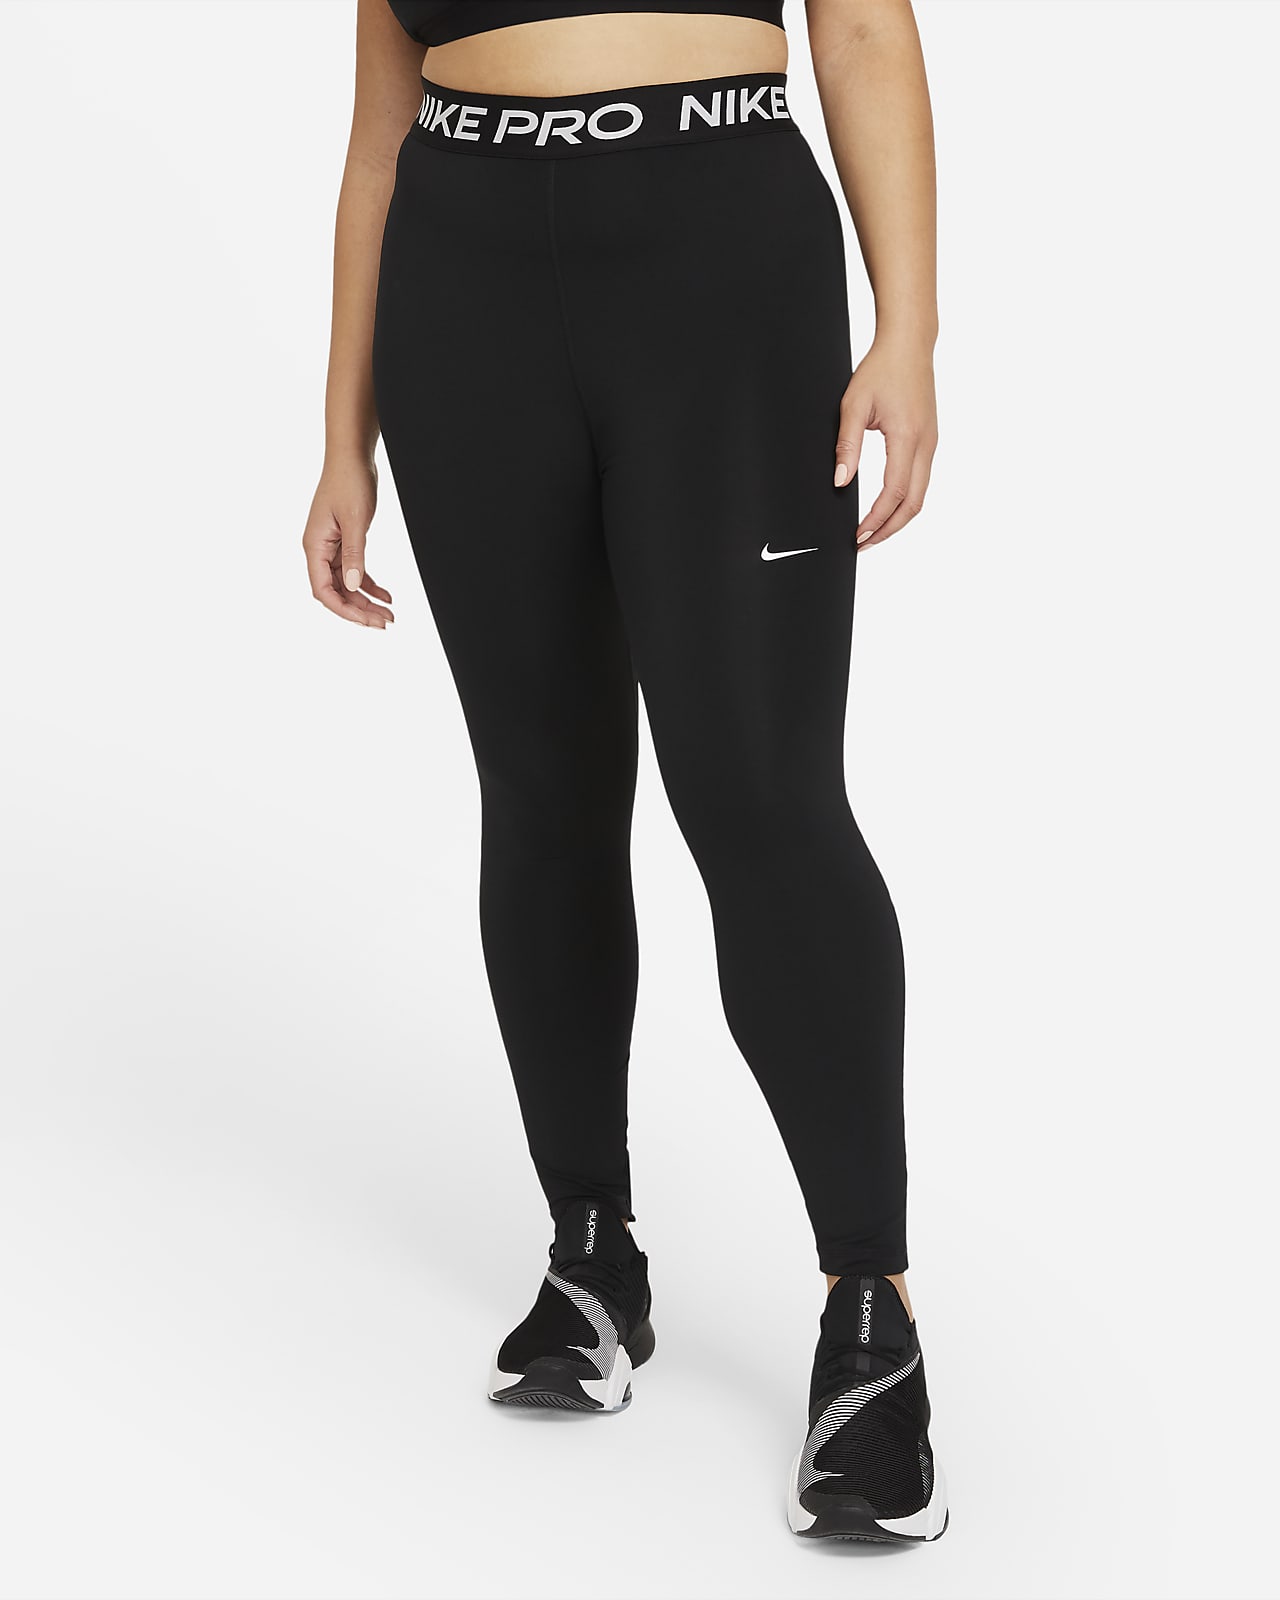 Nike Pro 365 Women's Leggings (Plus Size). Nike